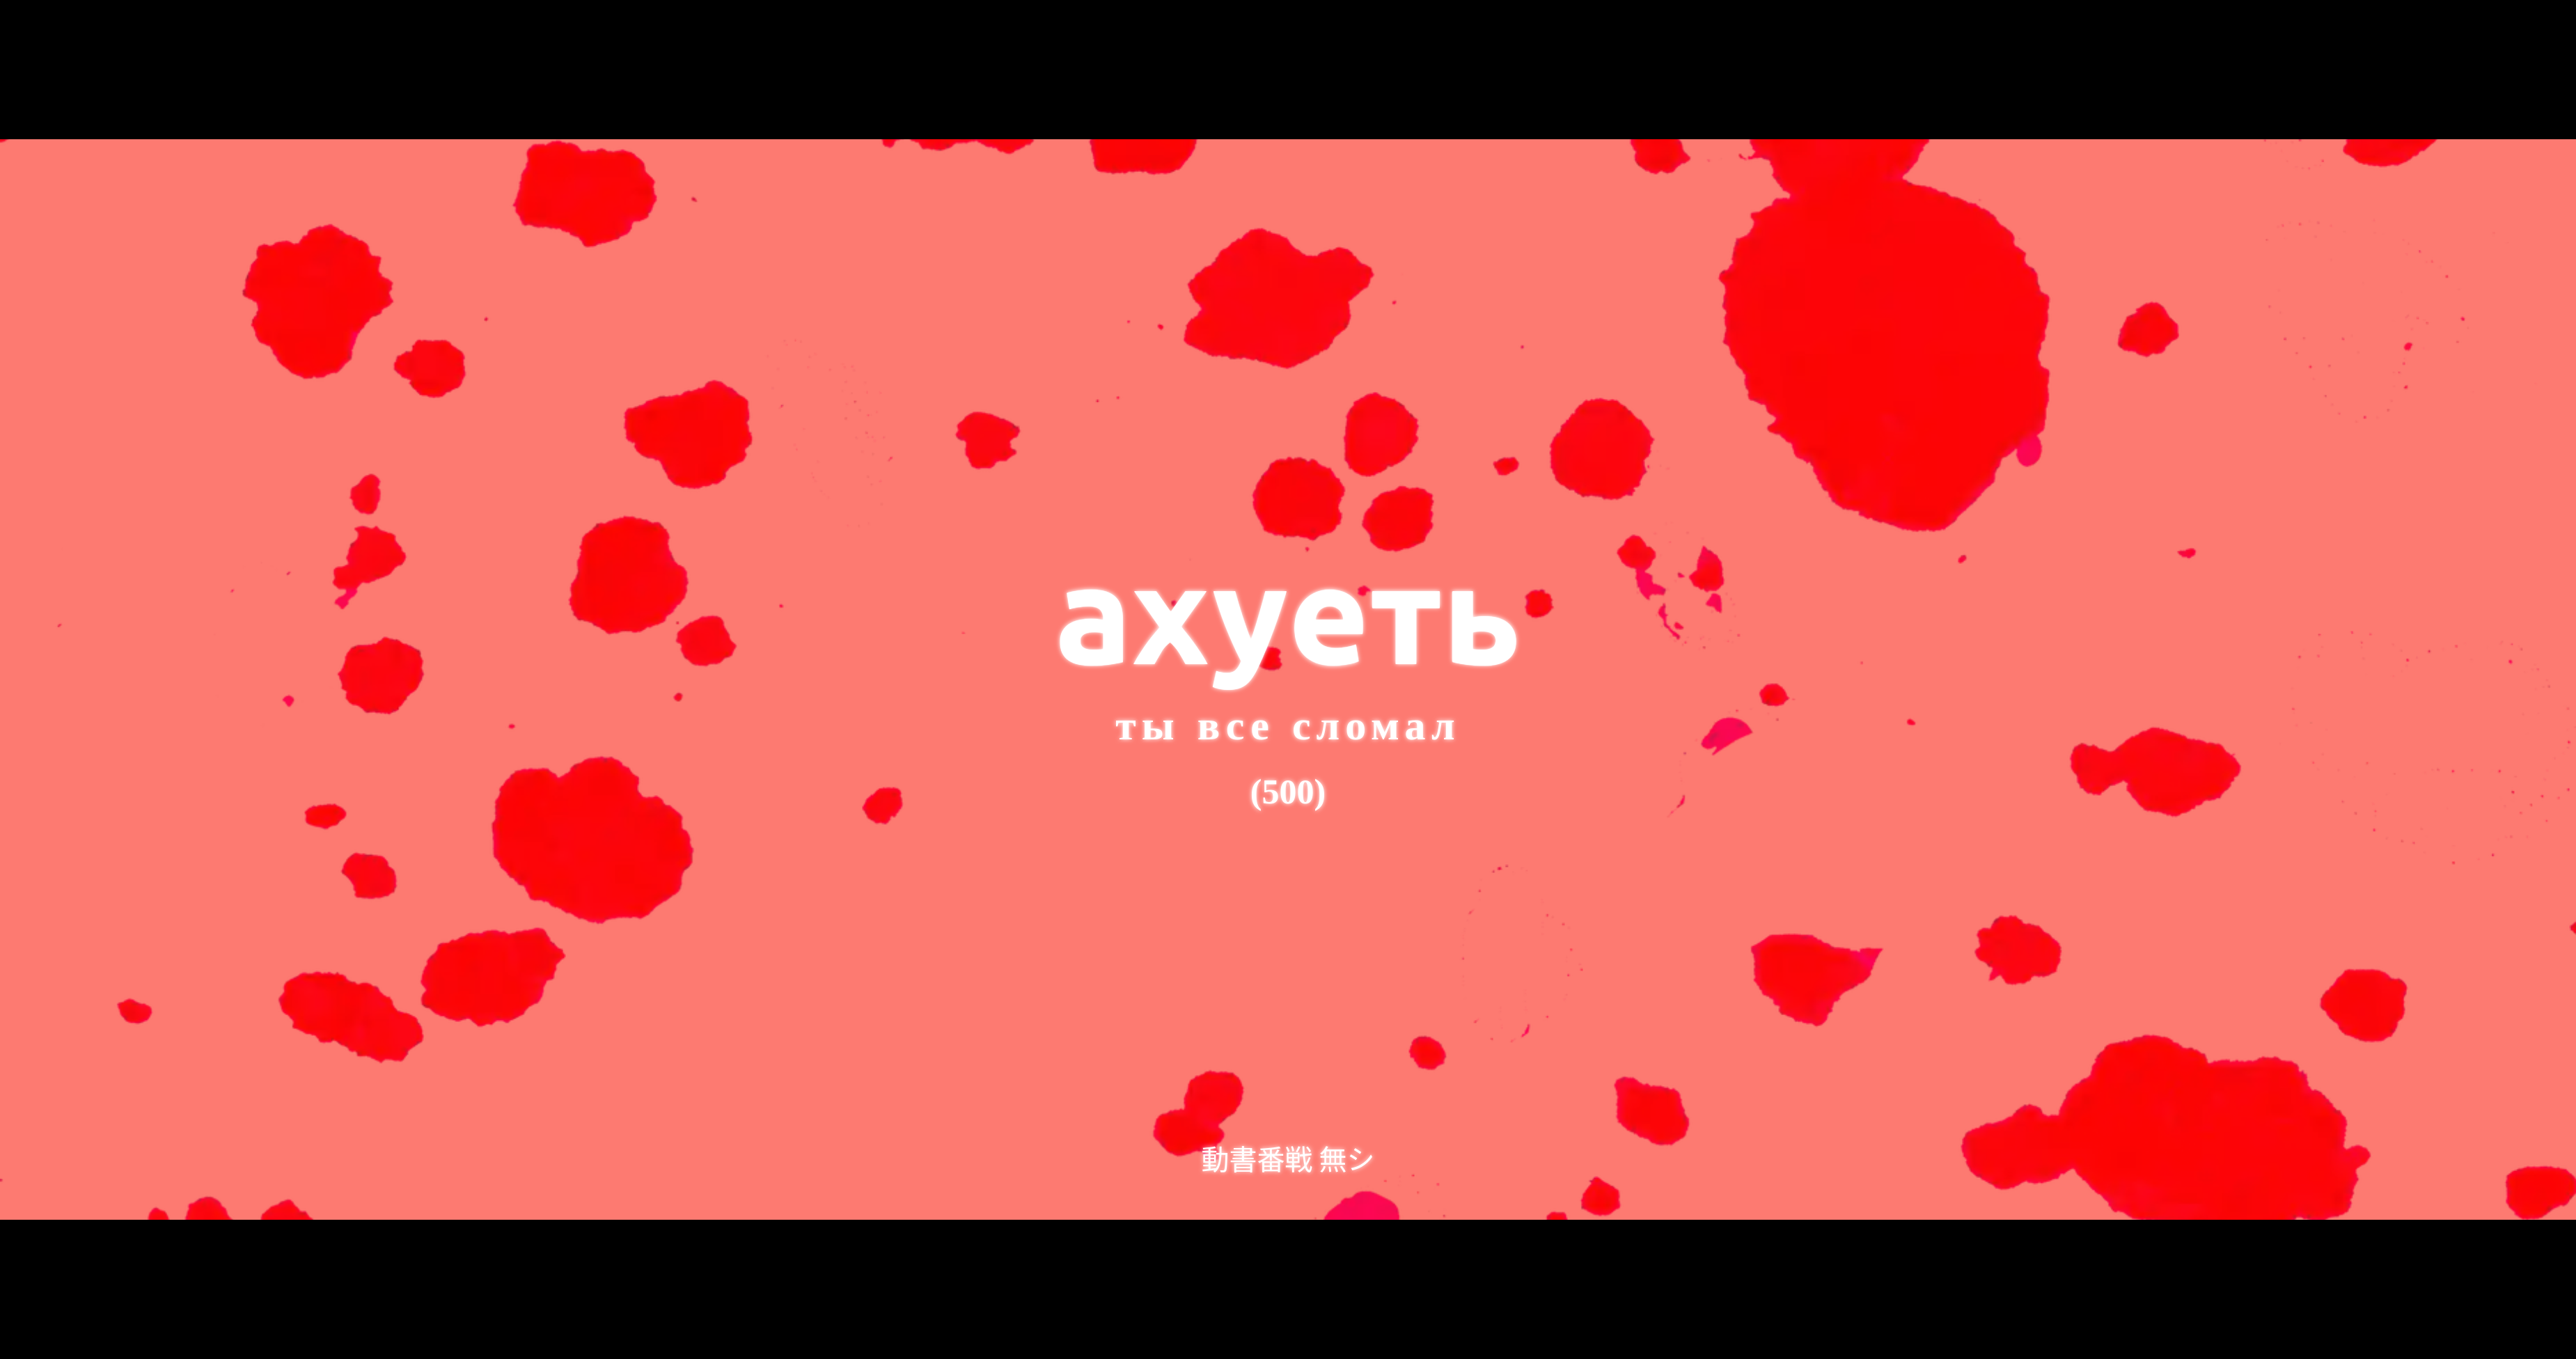 Errors Internet Code Russian Graphic Design Text Bright Obscene Red White Text 3700x1952